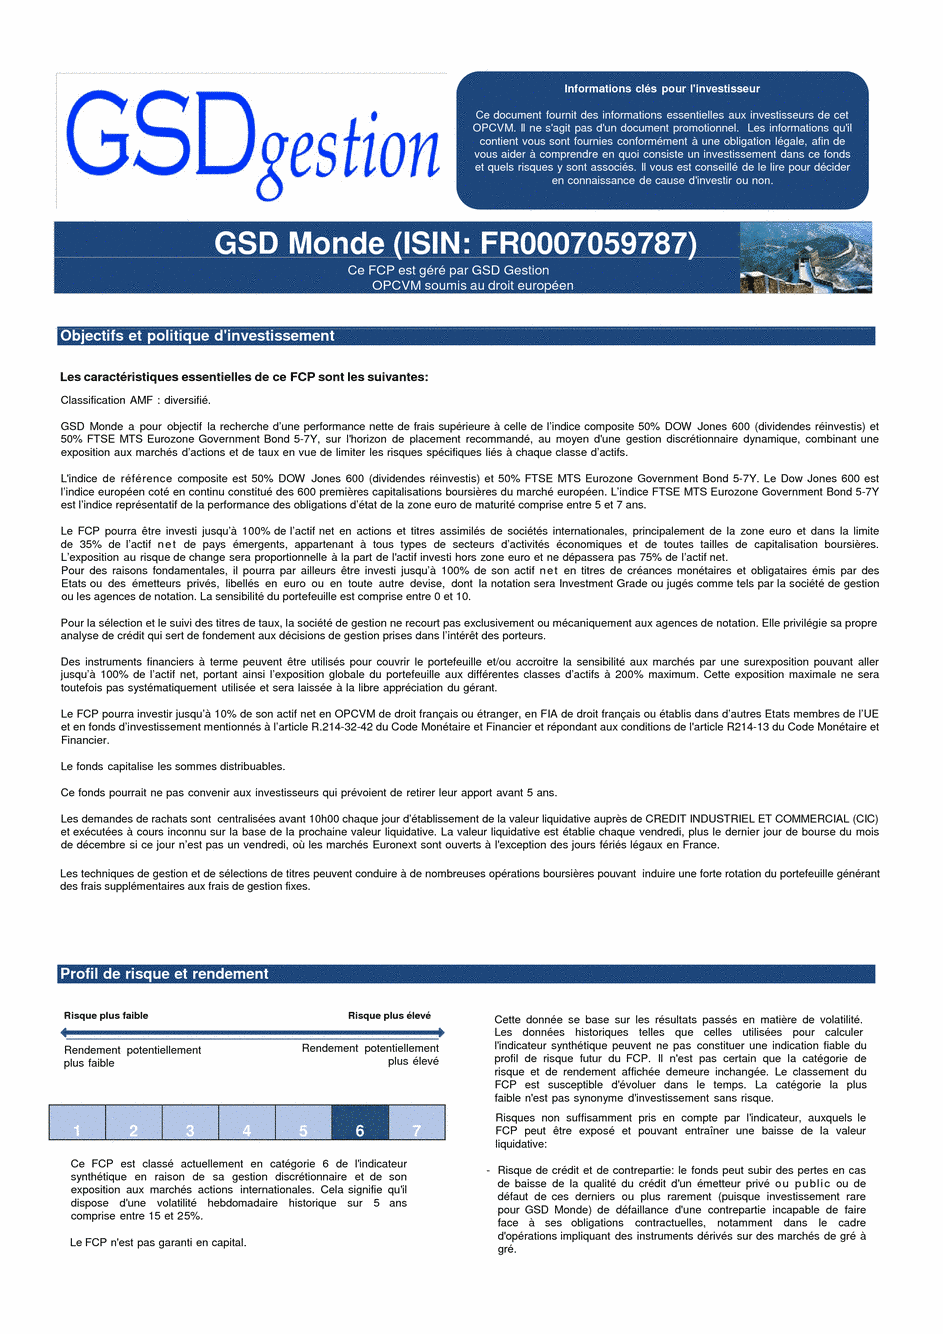 DICI-Prospectus GSD Monde - 06/09/2016 - French